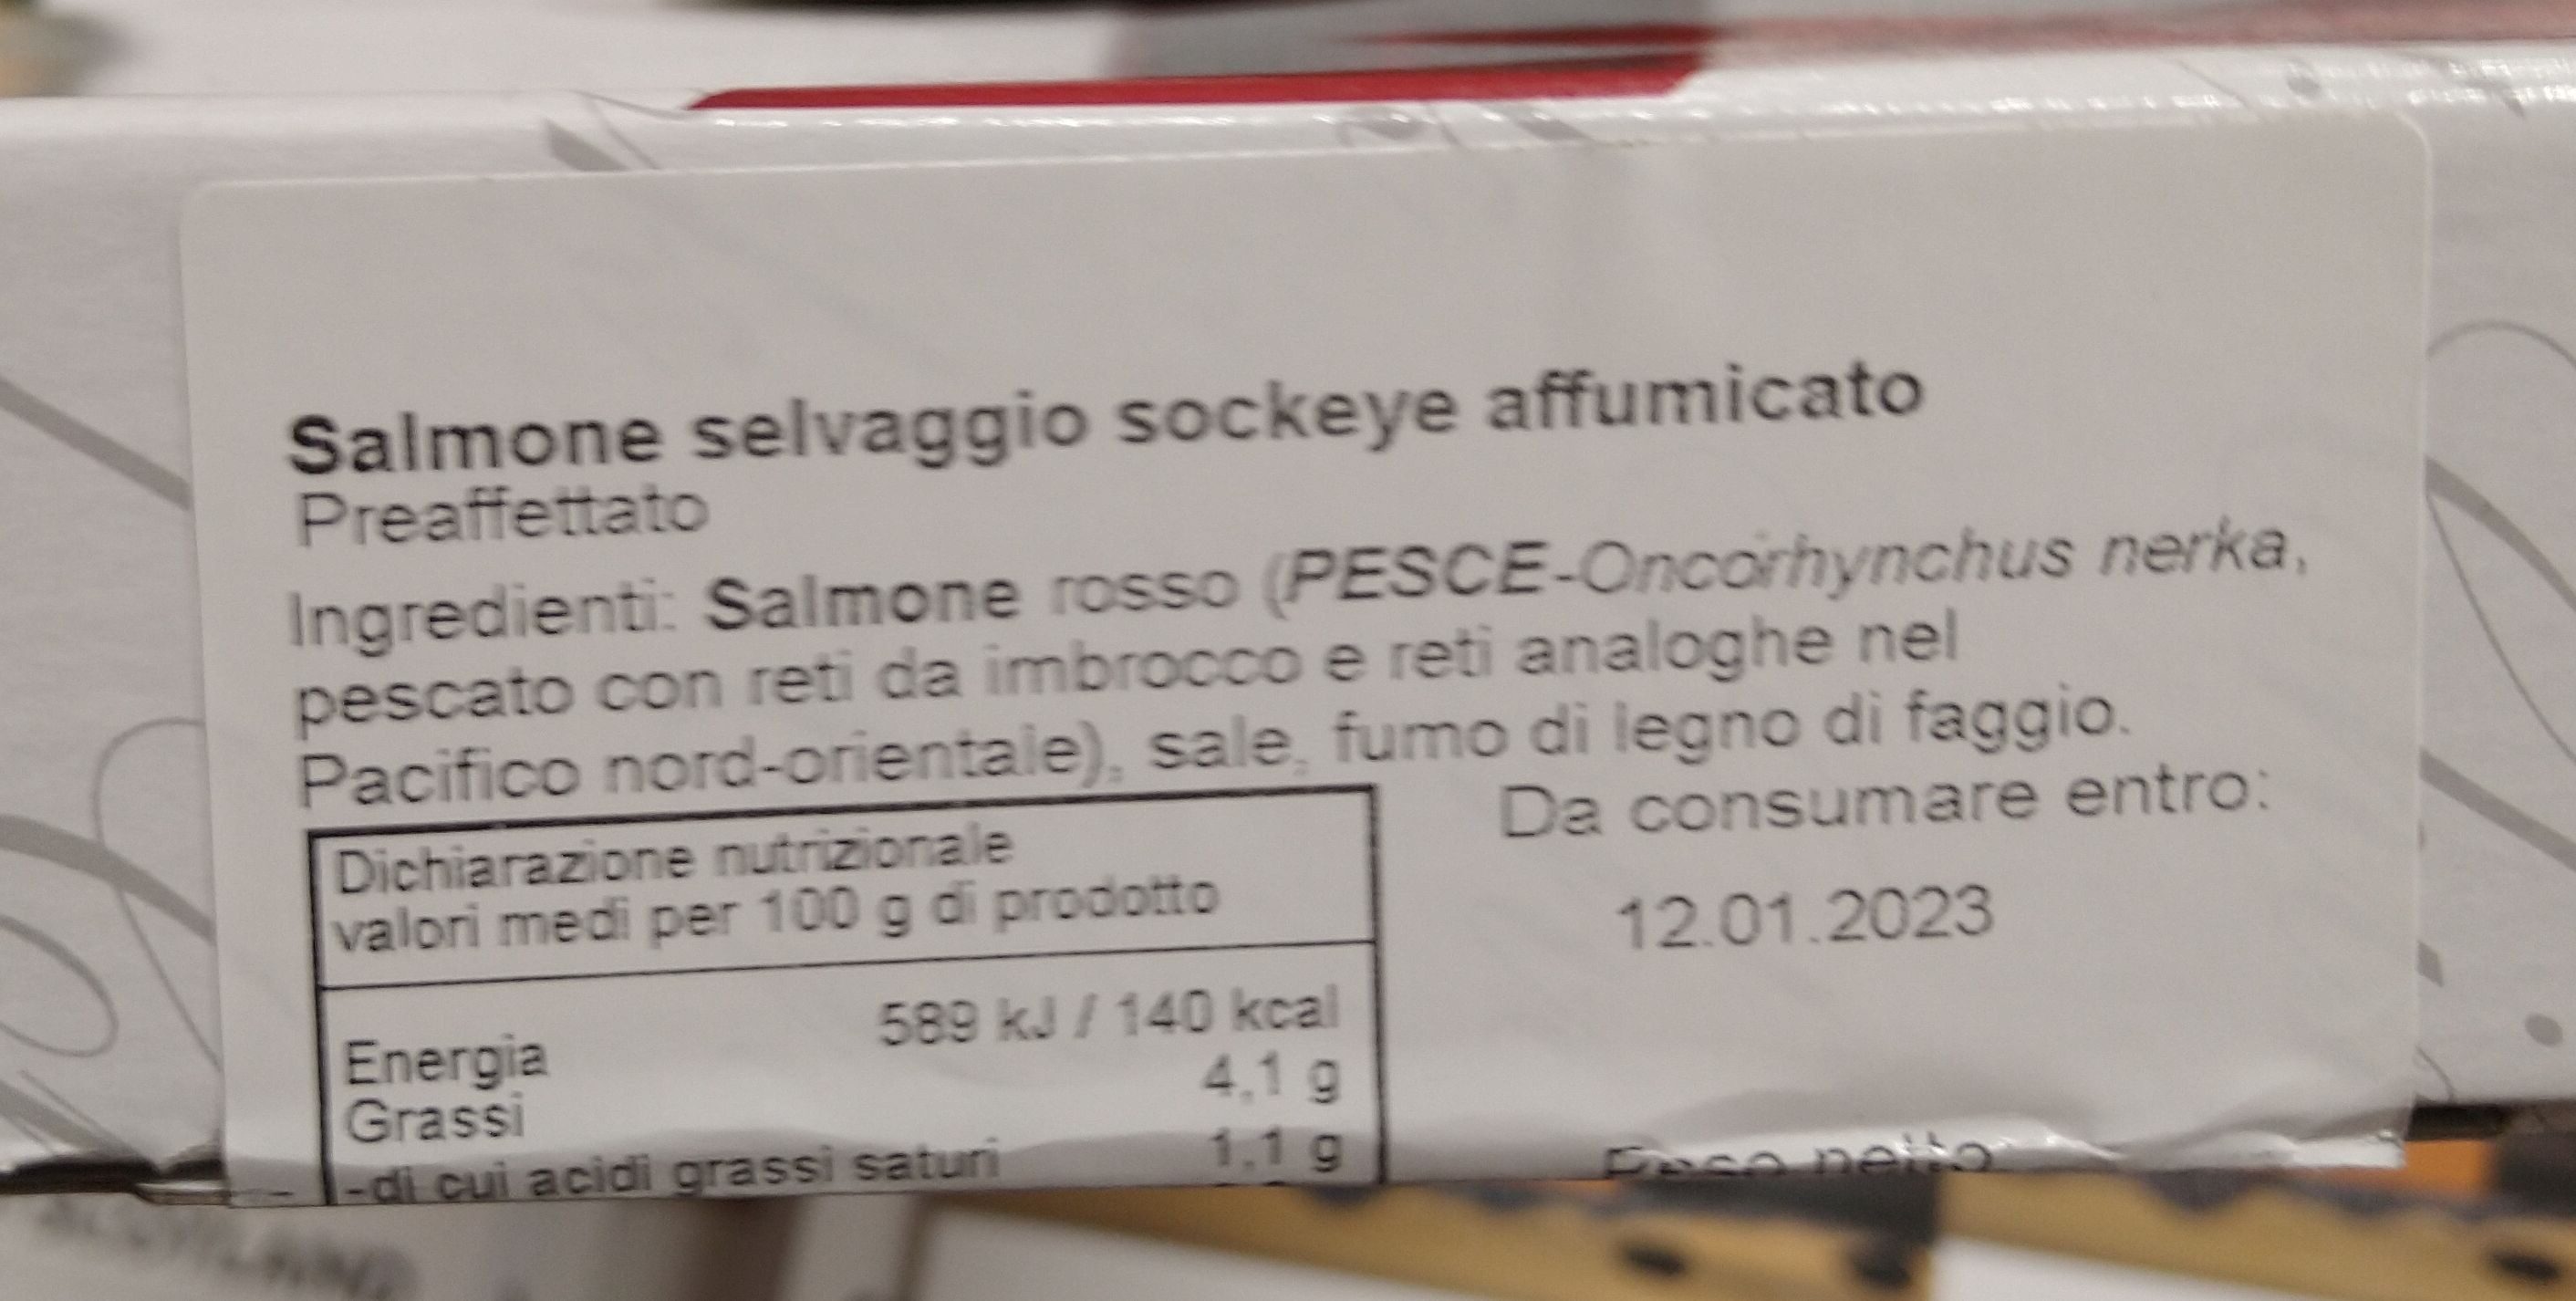 Salmone selvaggio affumicato - Ingredienti